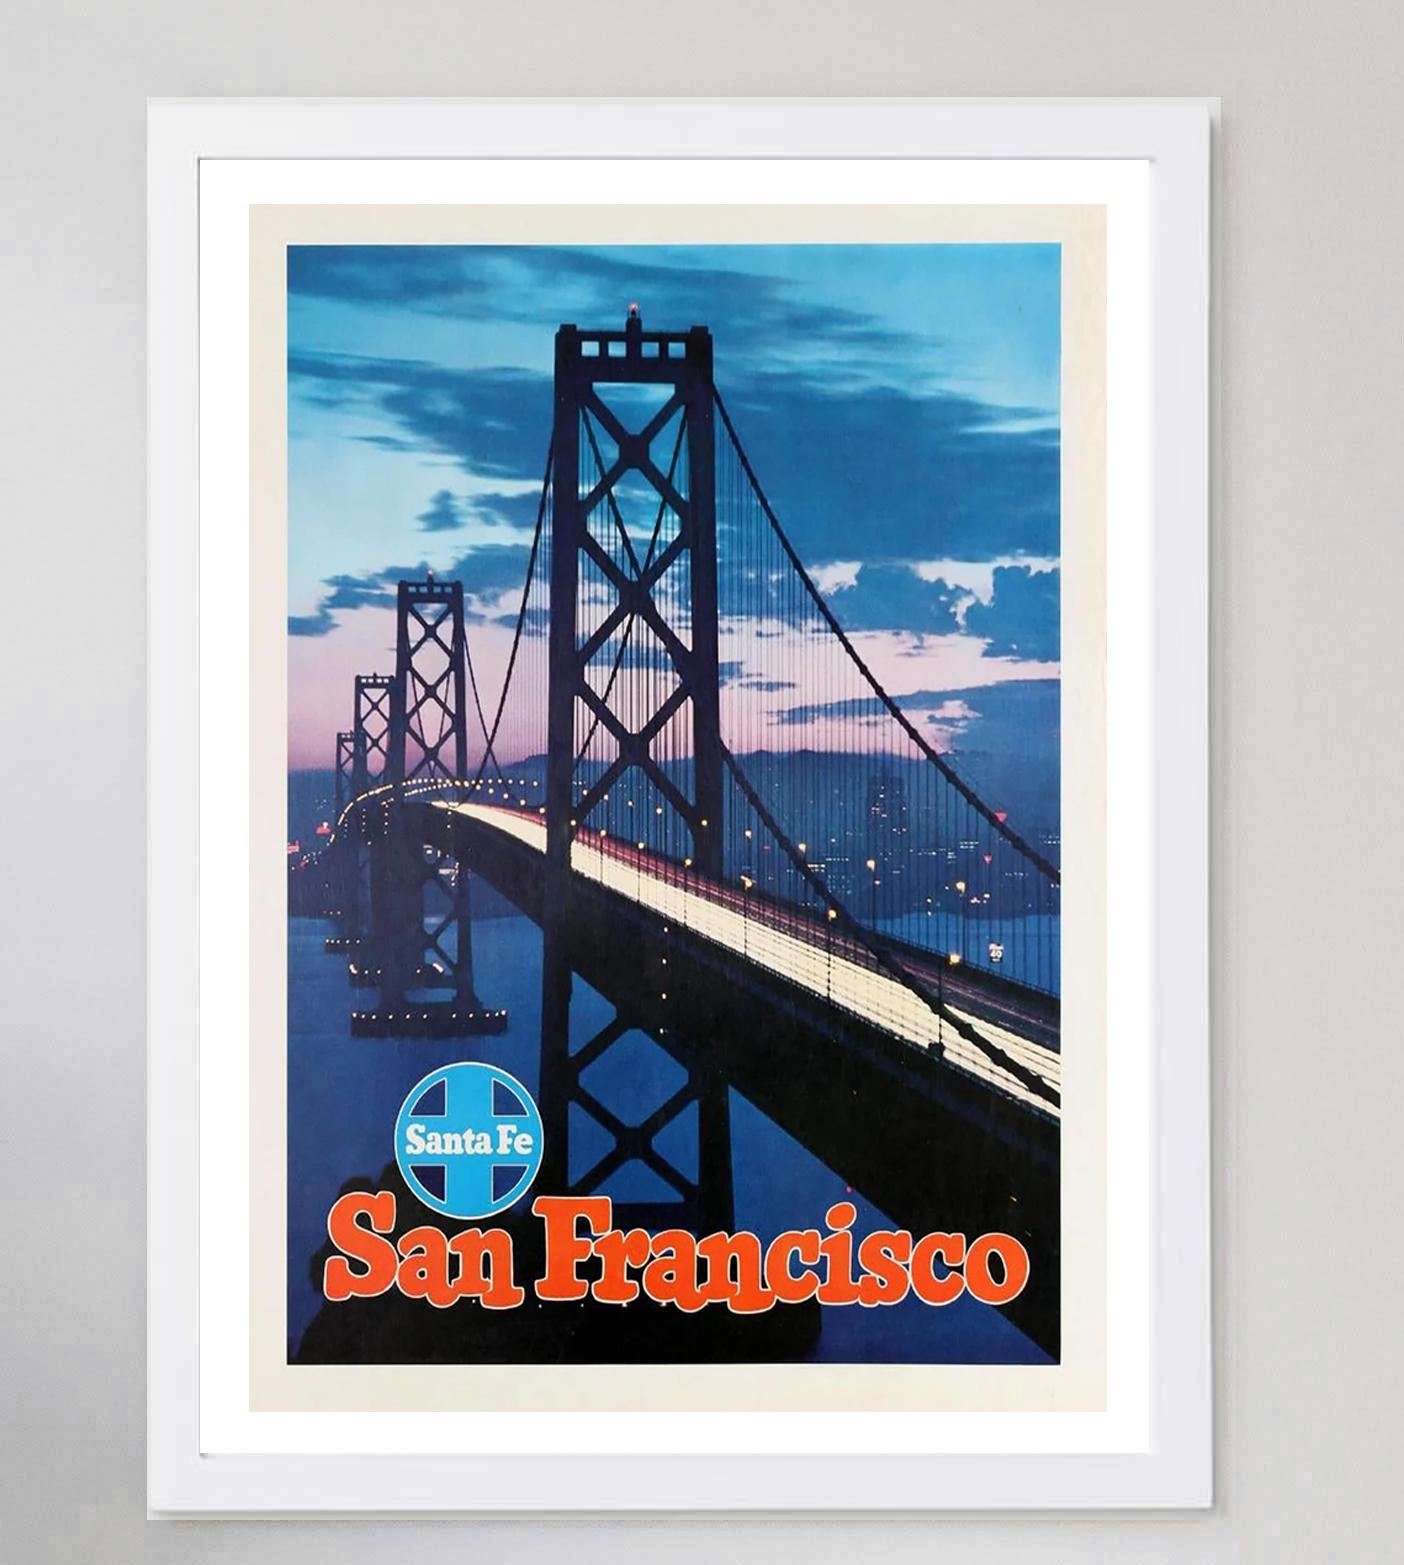 1950 Santa Fe Railway, San Francisco Original Vintage Poster In Good Condition For Sale In Winchester, GB